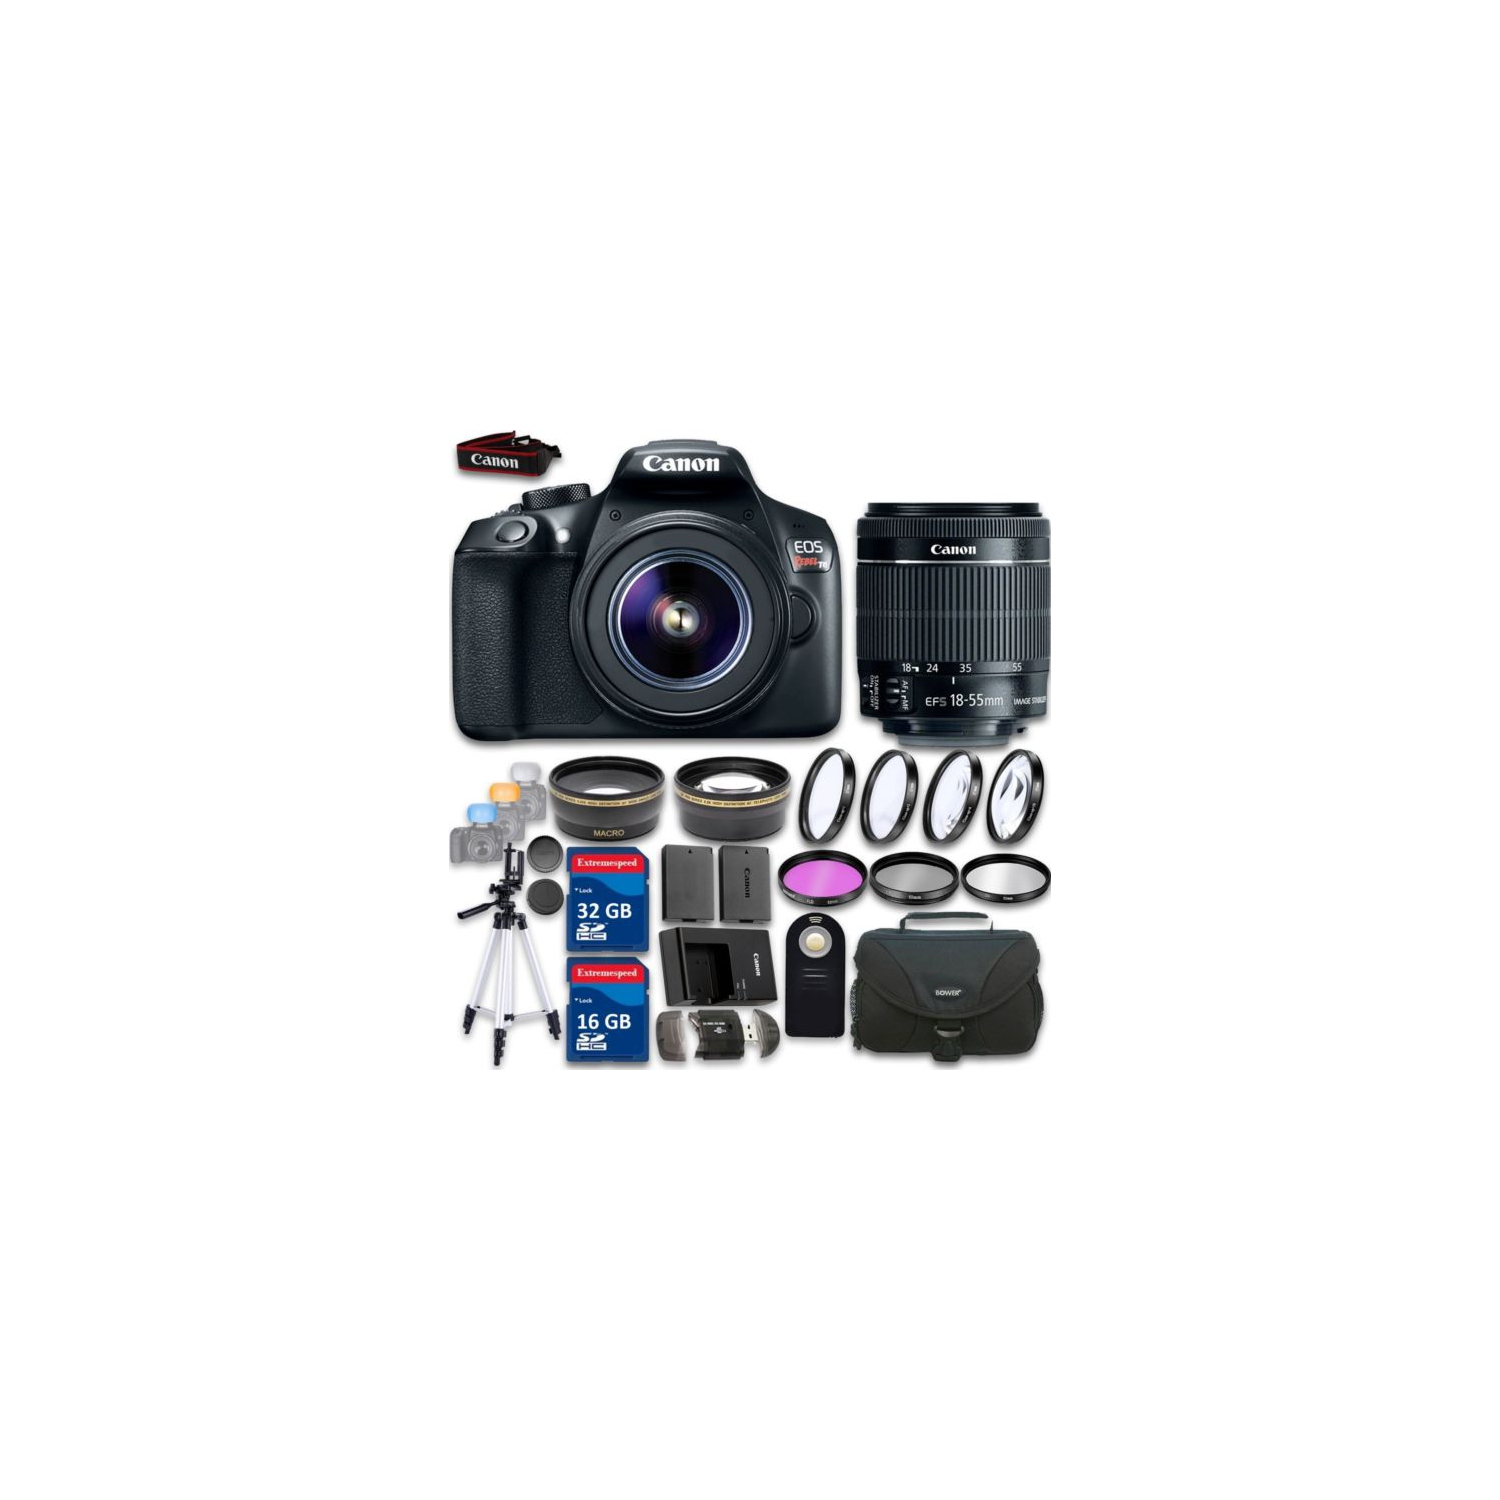 Canon EOS Rebel T6/1300D 18MP DSLR Camera with 18-55mm Lens Bundle - US Version w/ Seller Warranty